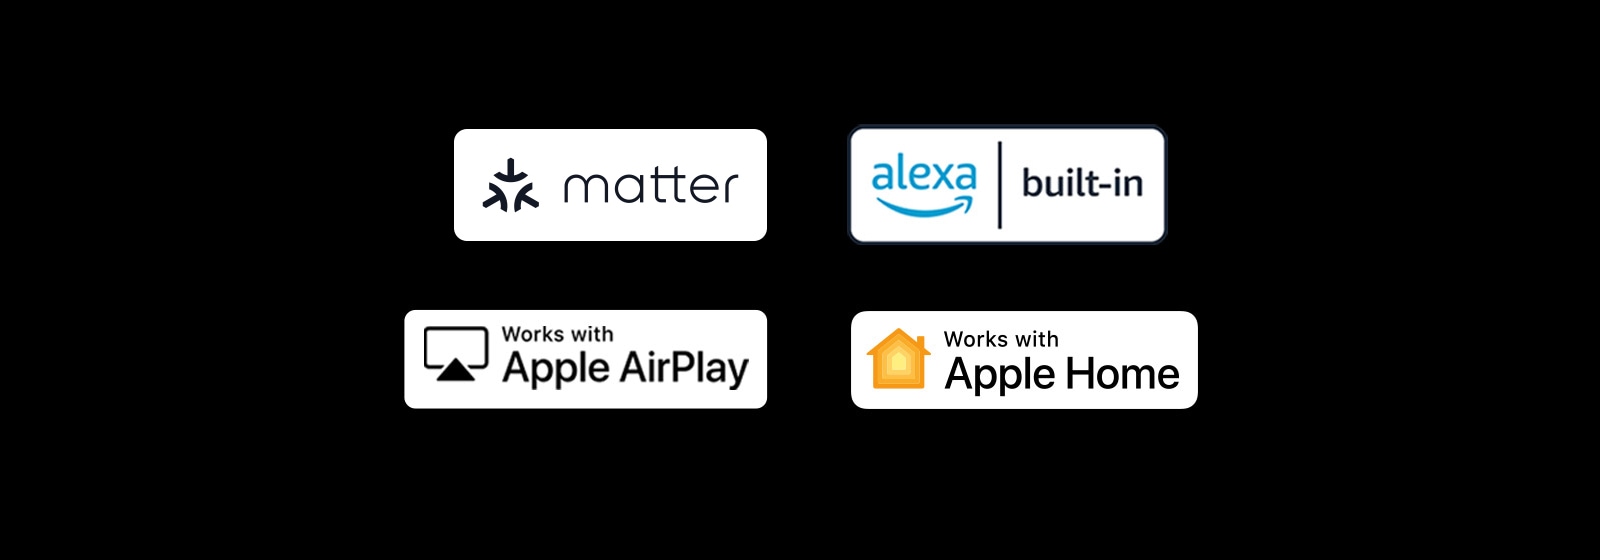 Logotipo de alexa integrada Logotipo de funciona con Apple AirPlay Logotipo de funciona con Apple Home Logotipo de funciona con Matter